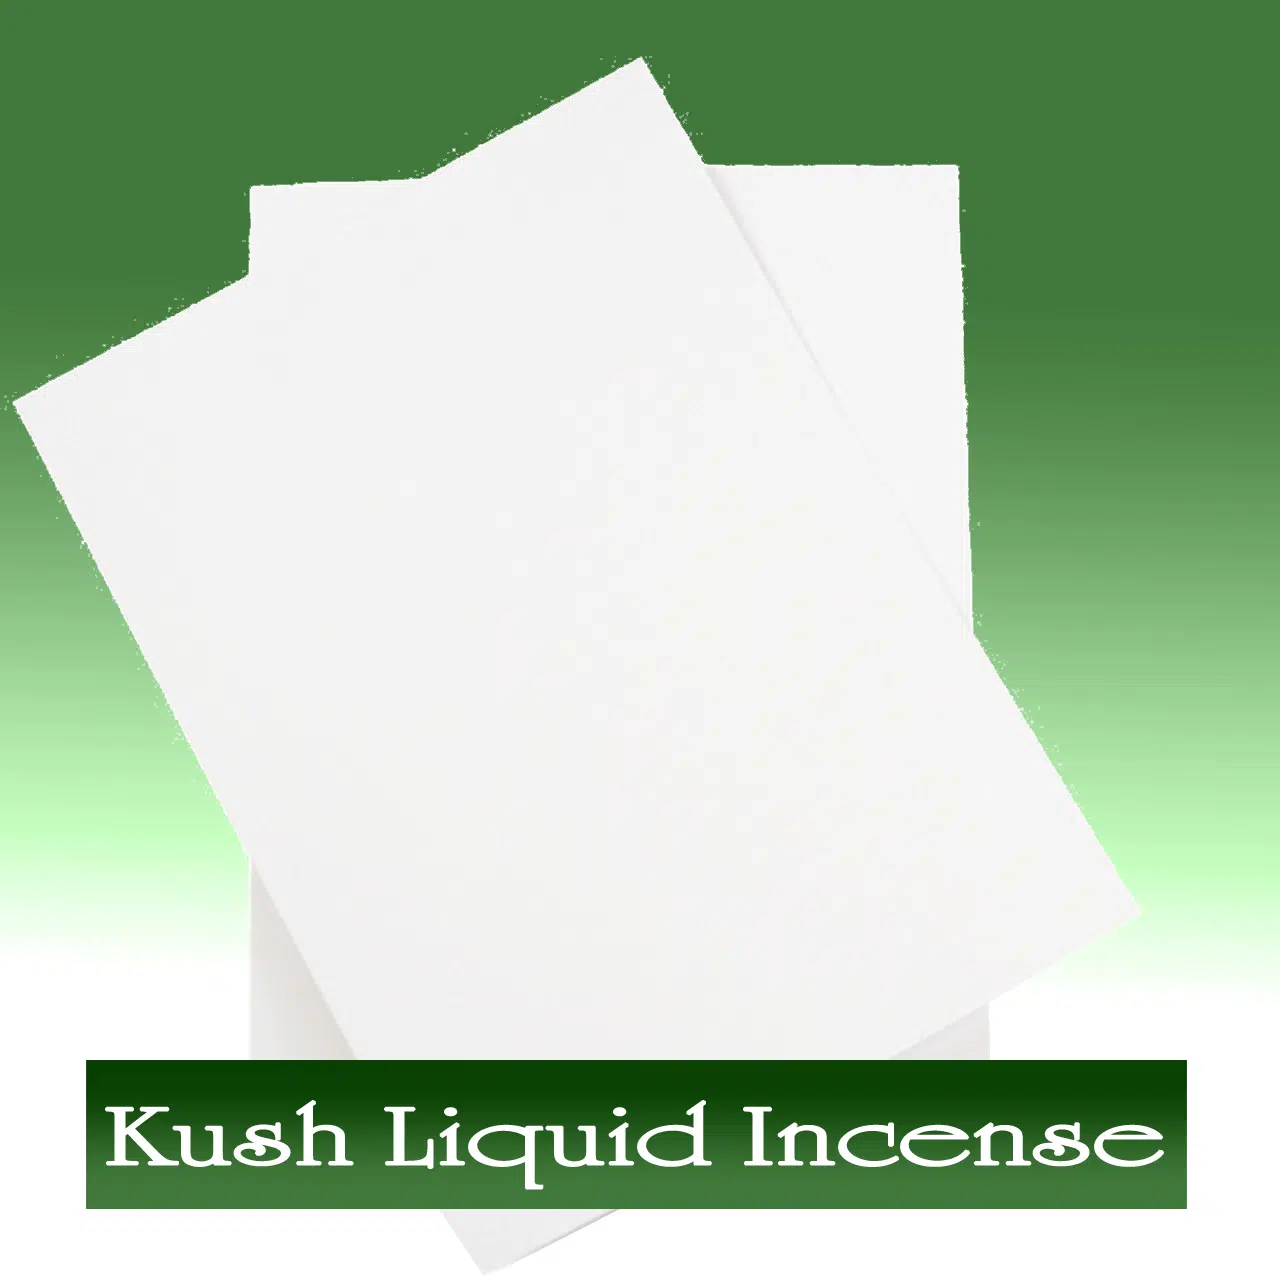 Kush liquid incense on paper